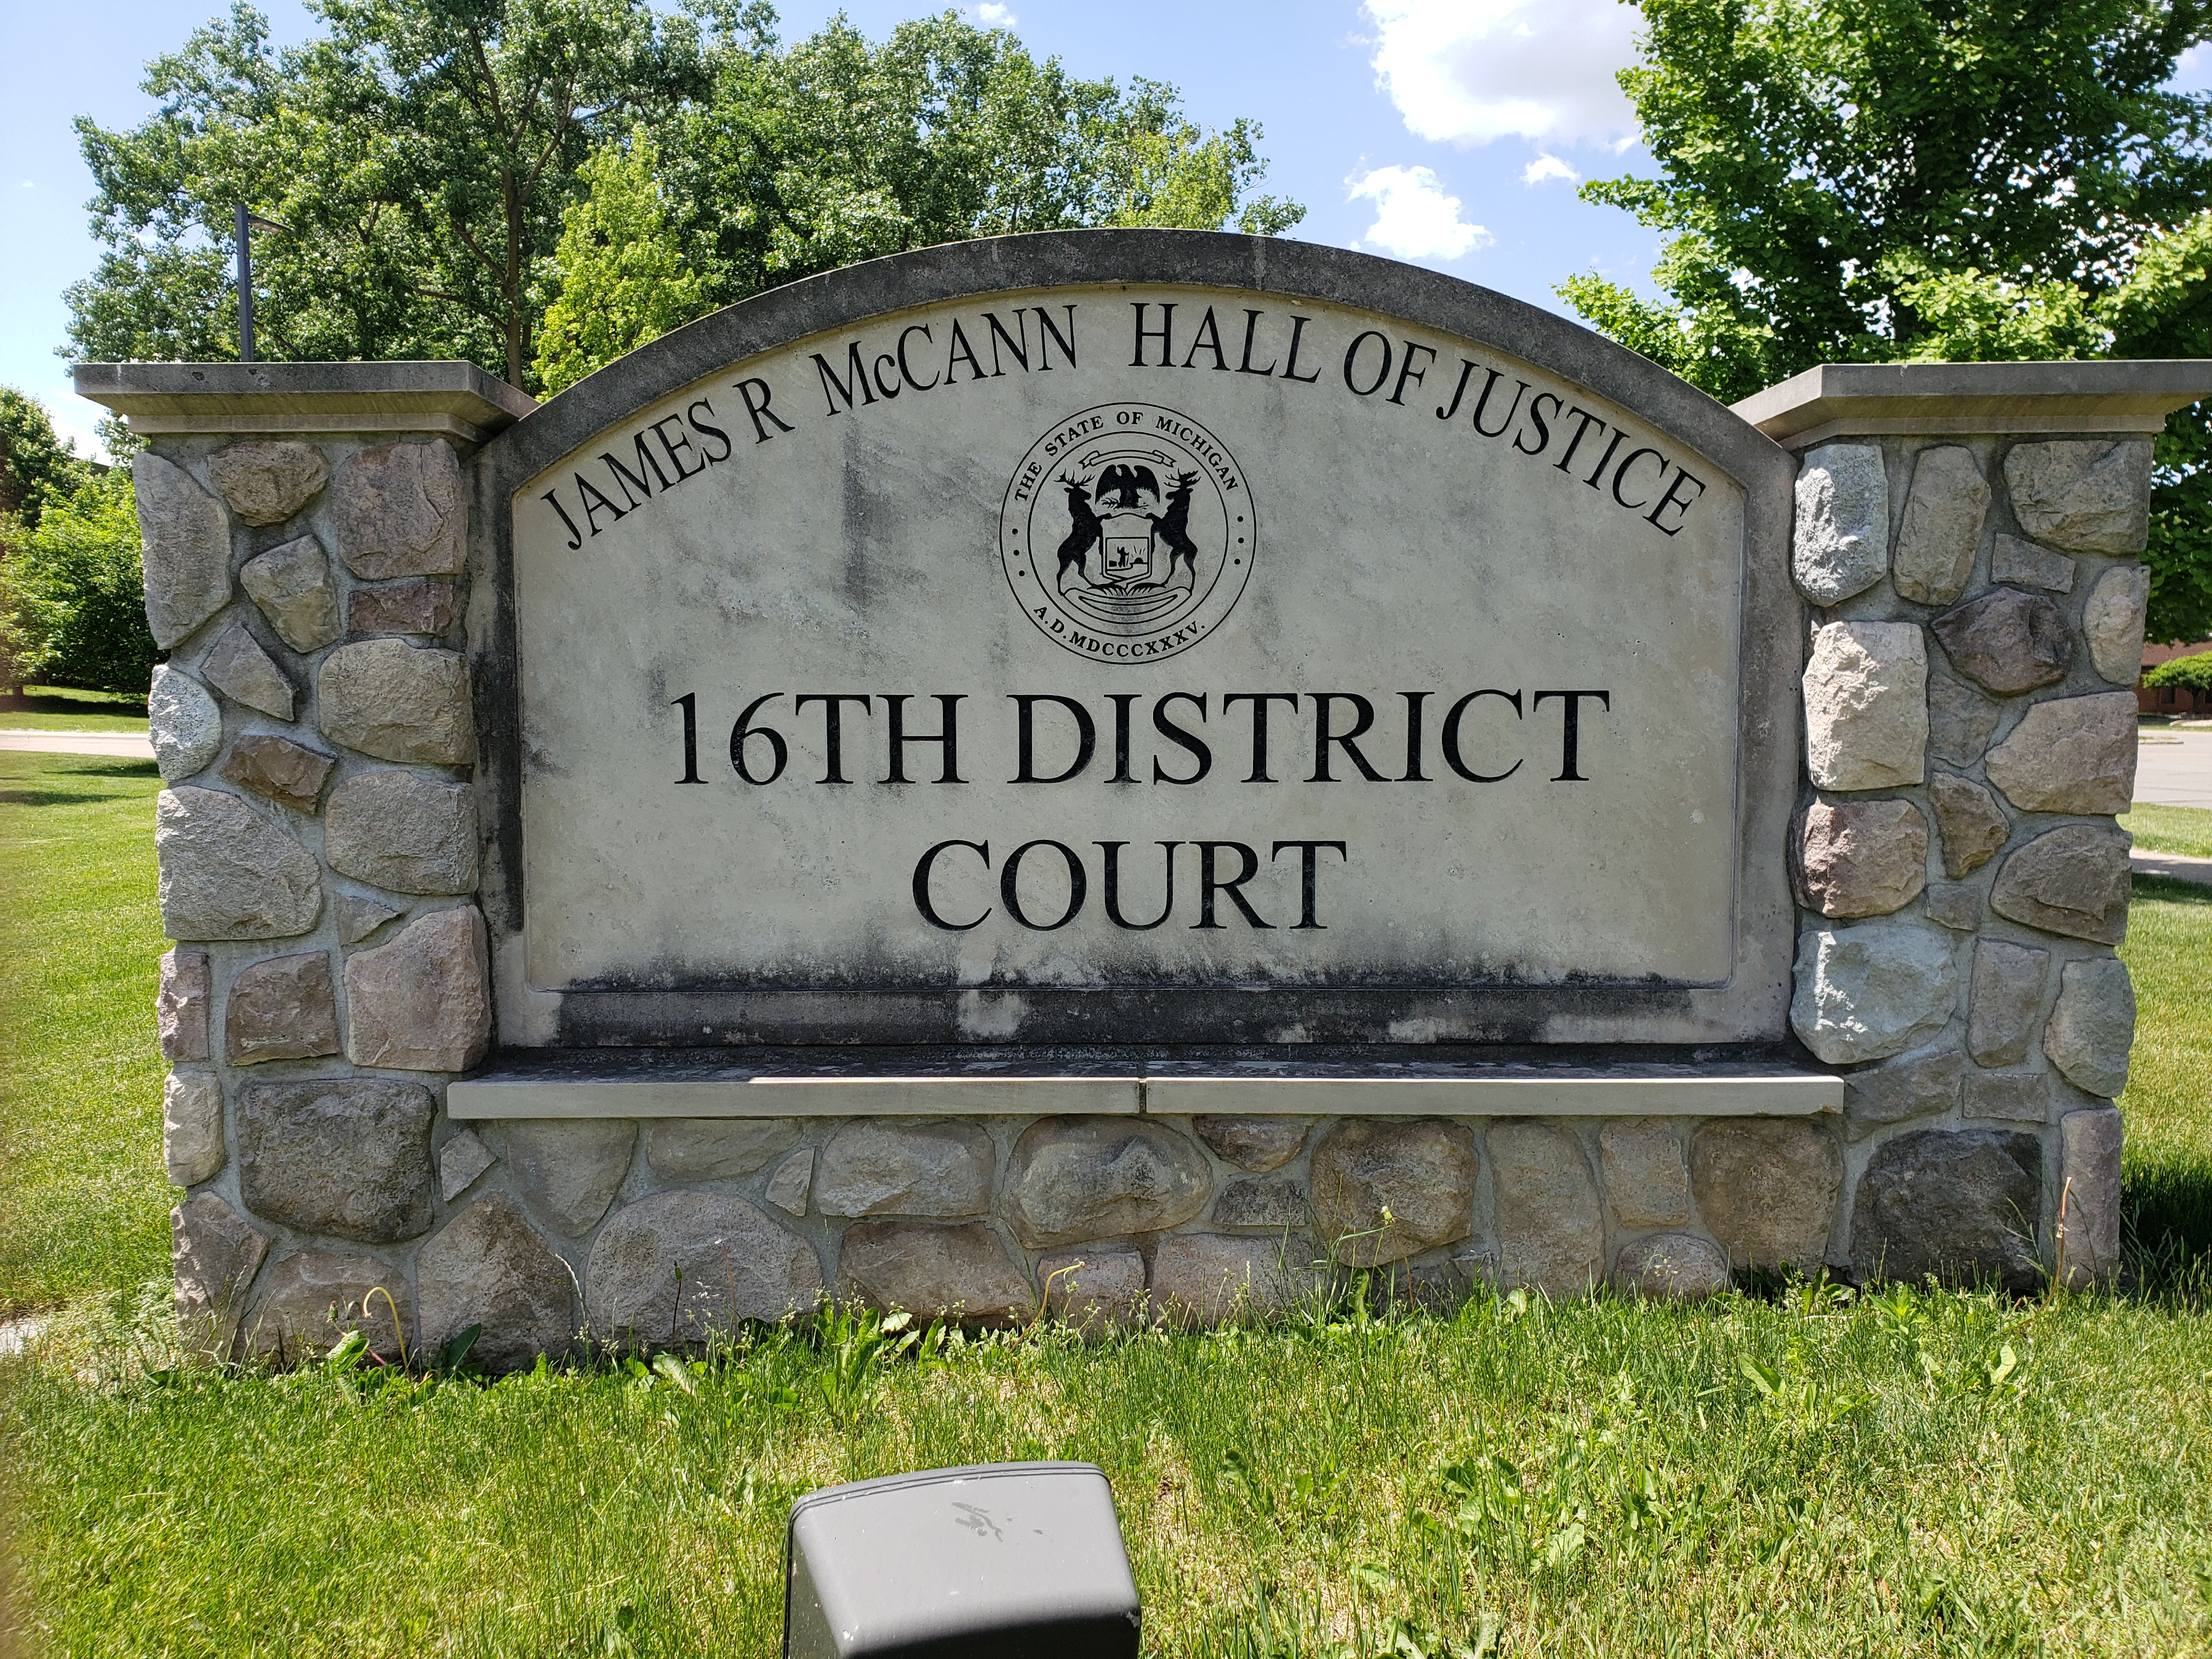 James R. McCann Hall of Justice